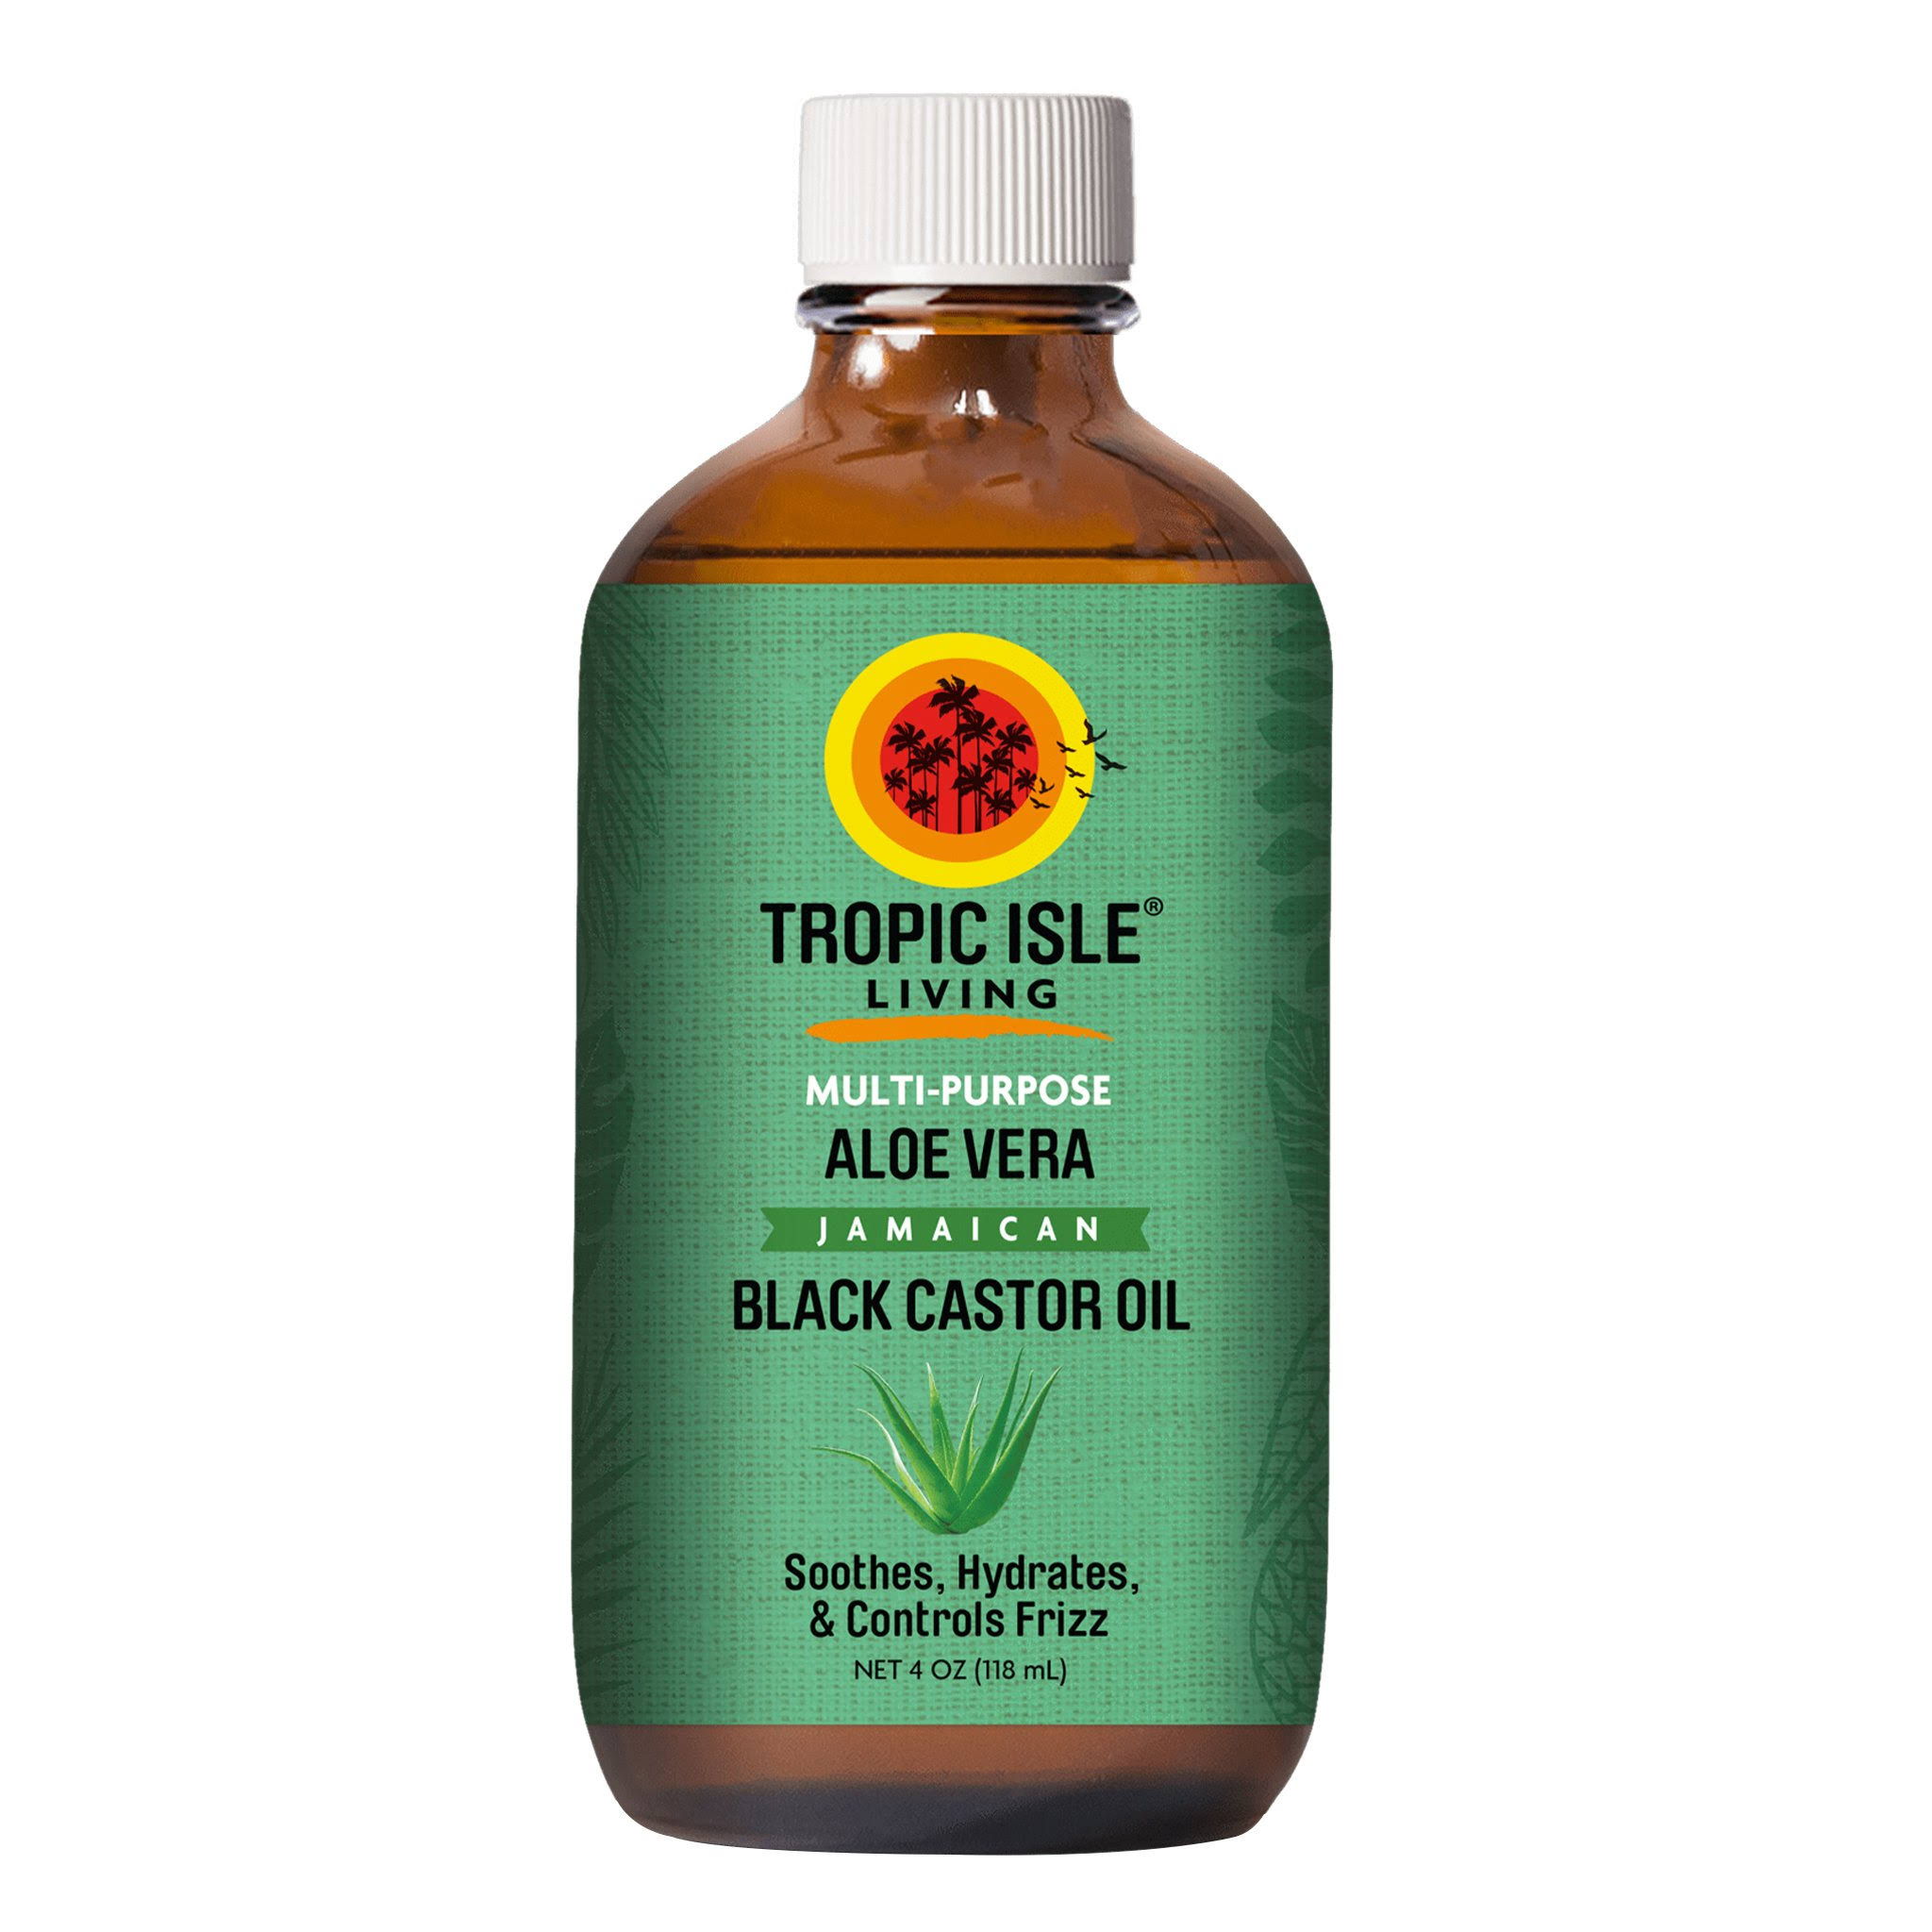 Tropic Isle Living Aloe Vera Jamaican Black Castor Oil 4 oz